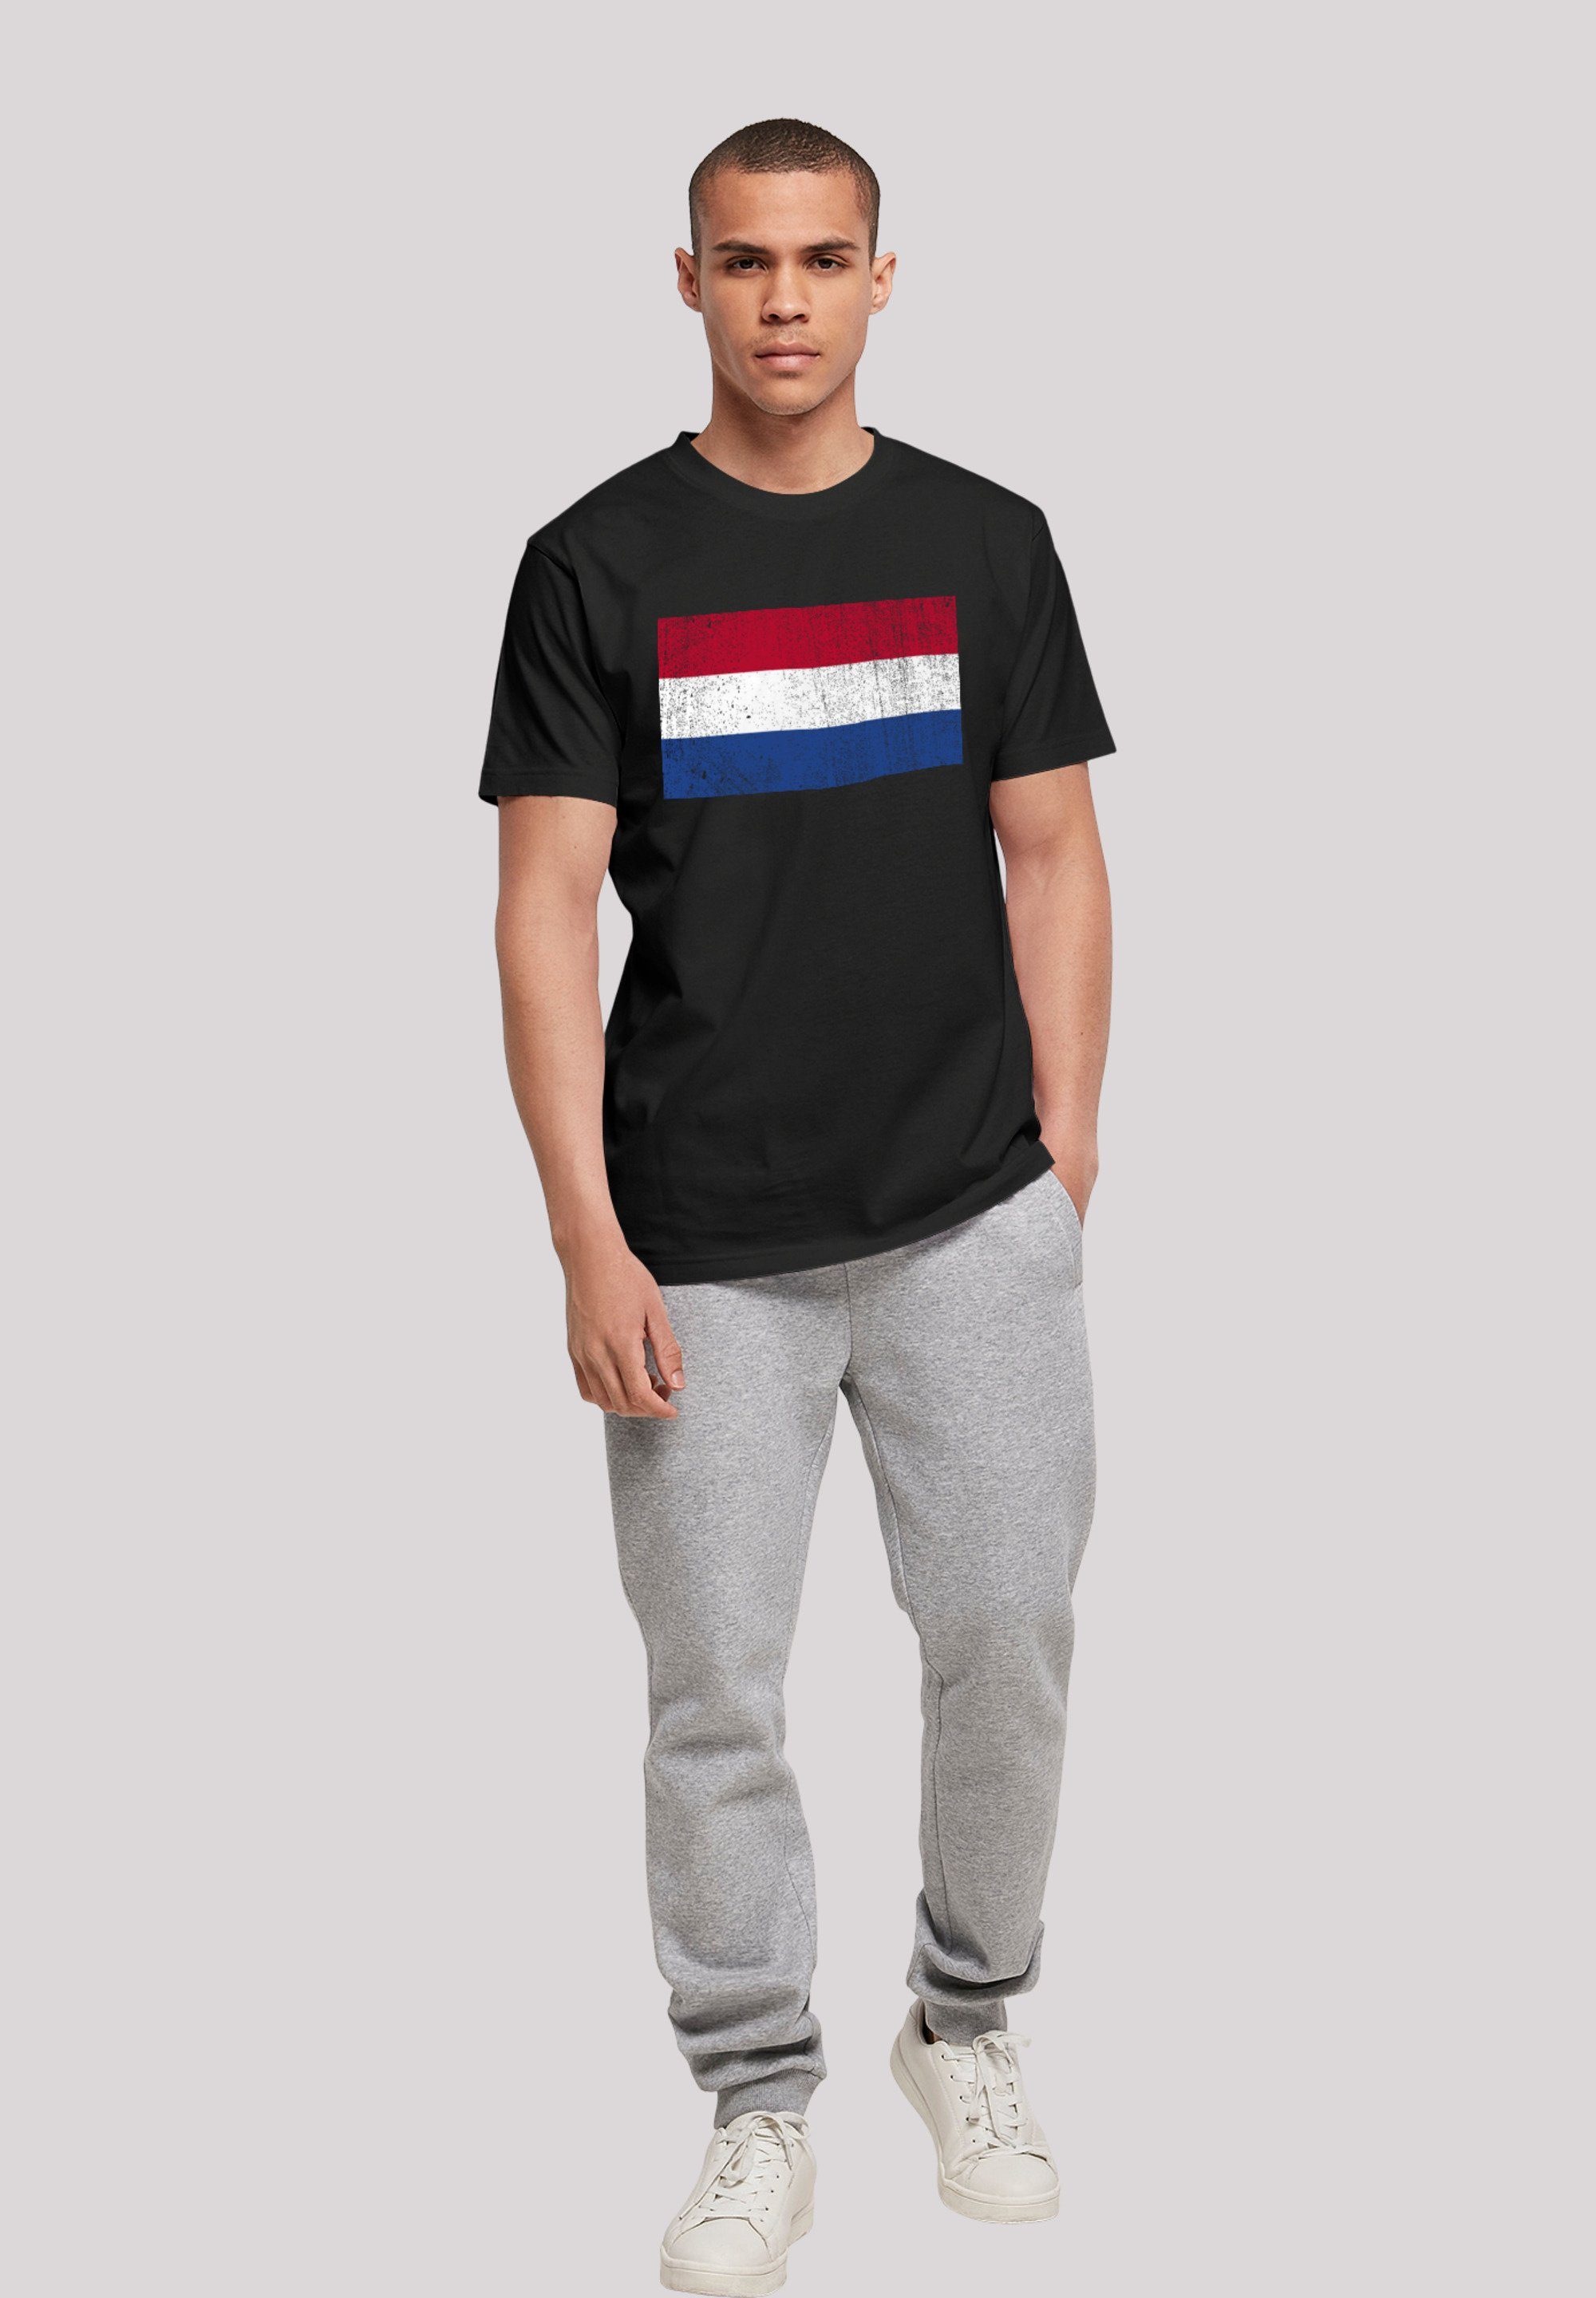 T-Shirt Print Niederlande schwarz Flagge Holland distressed F4NT4STIC